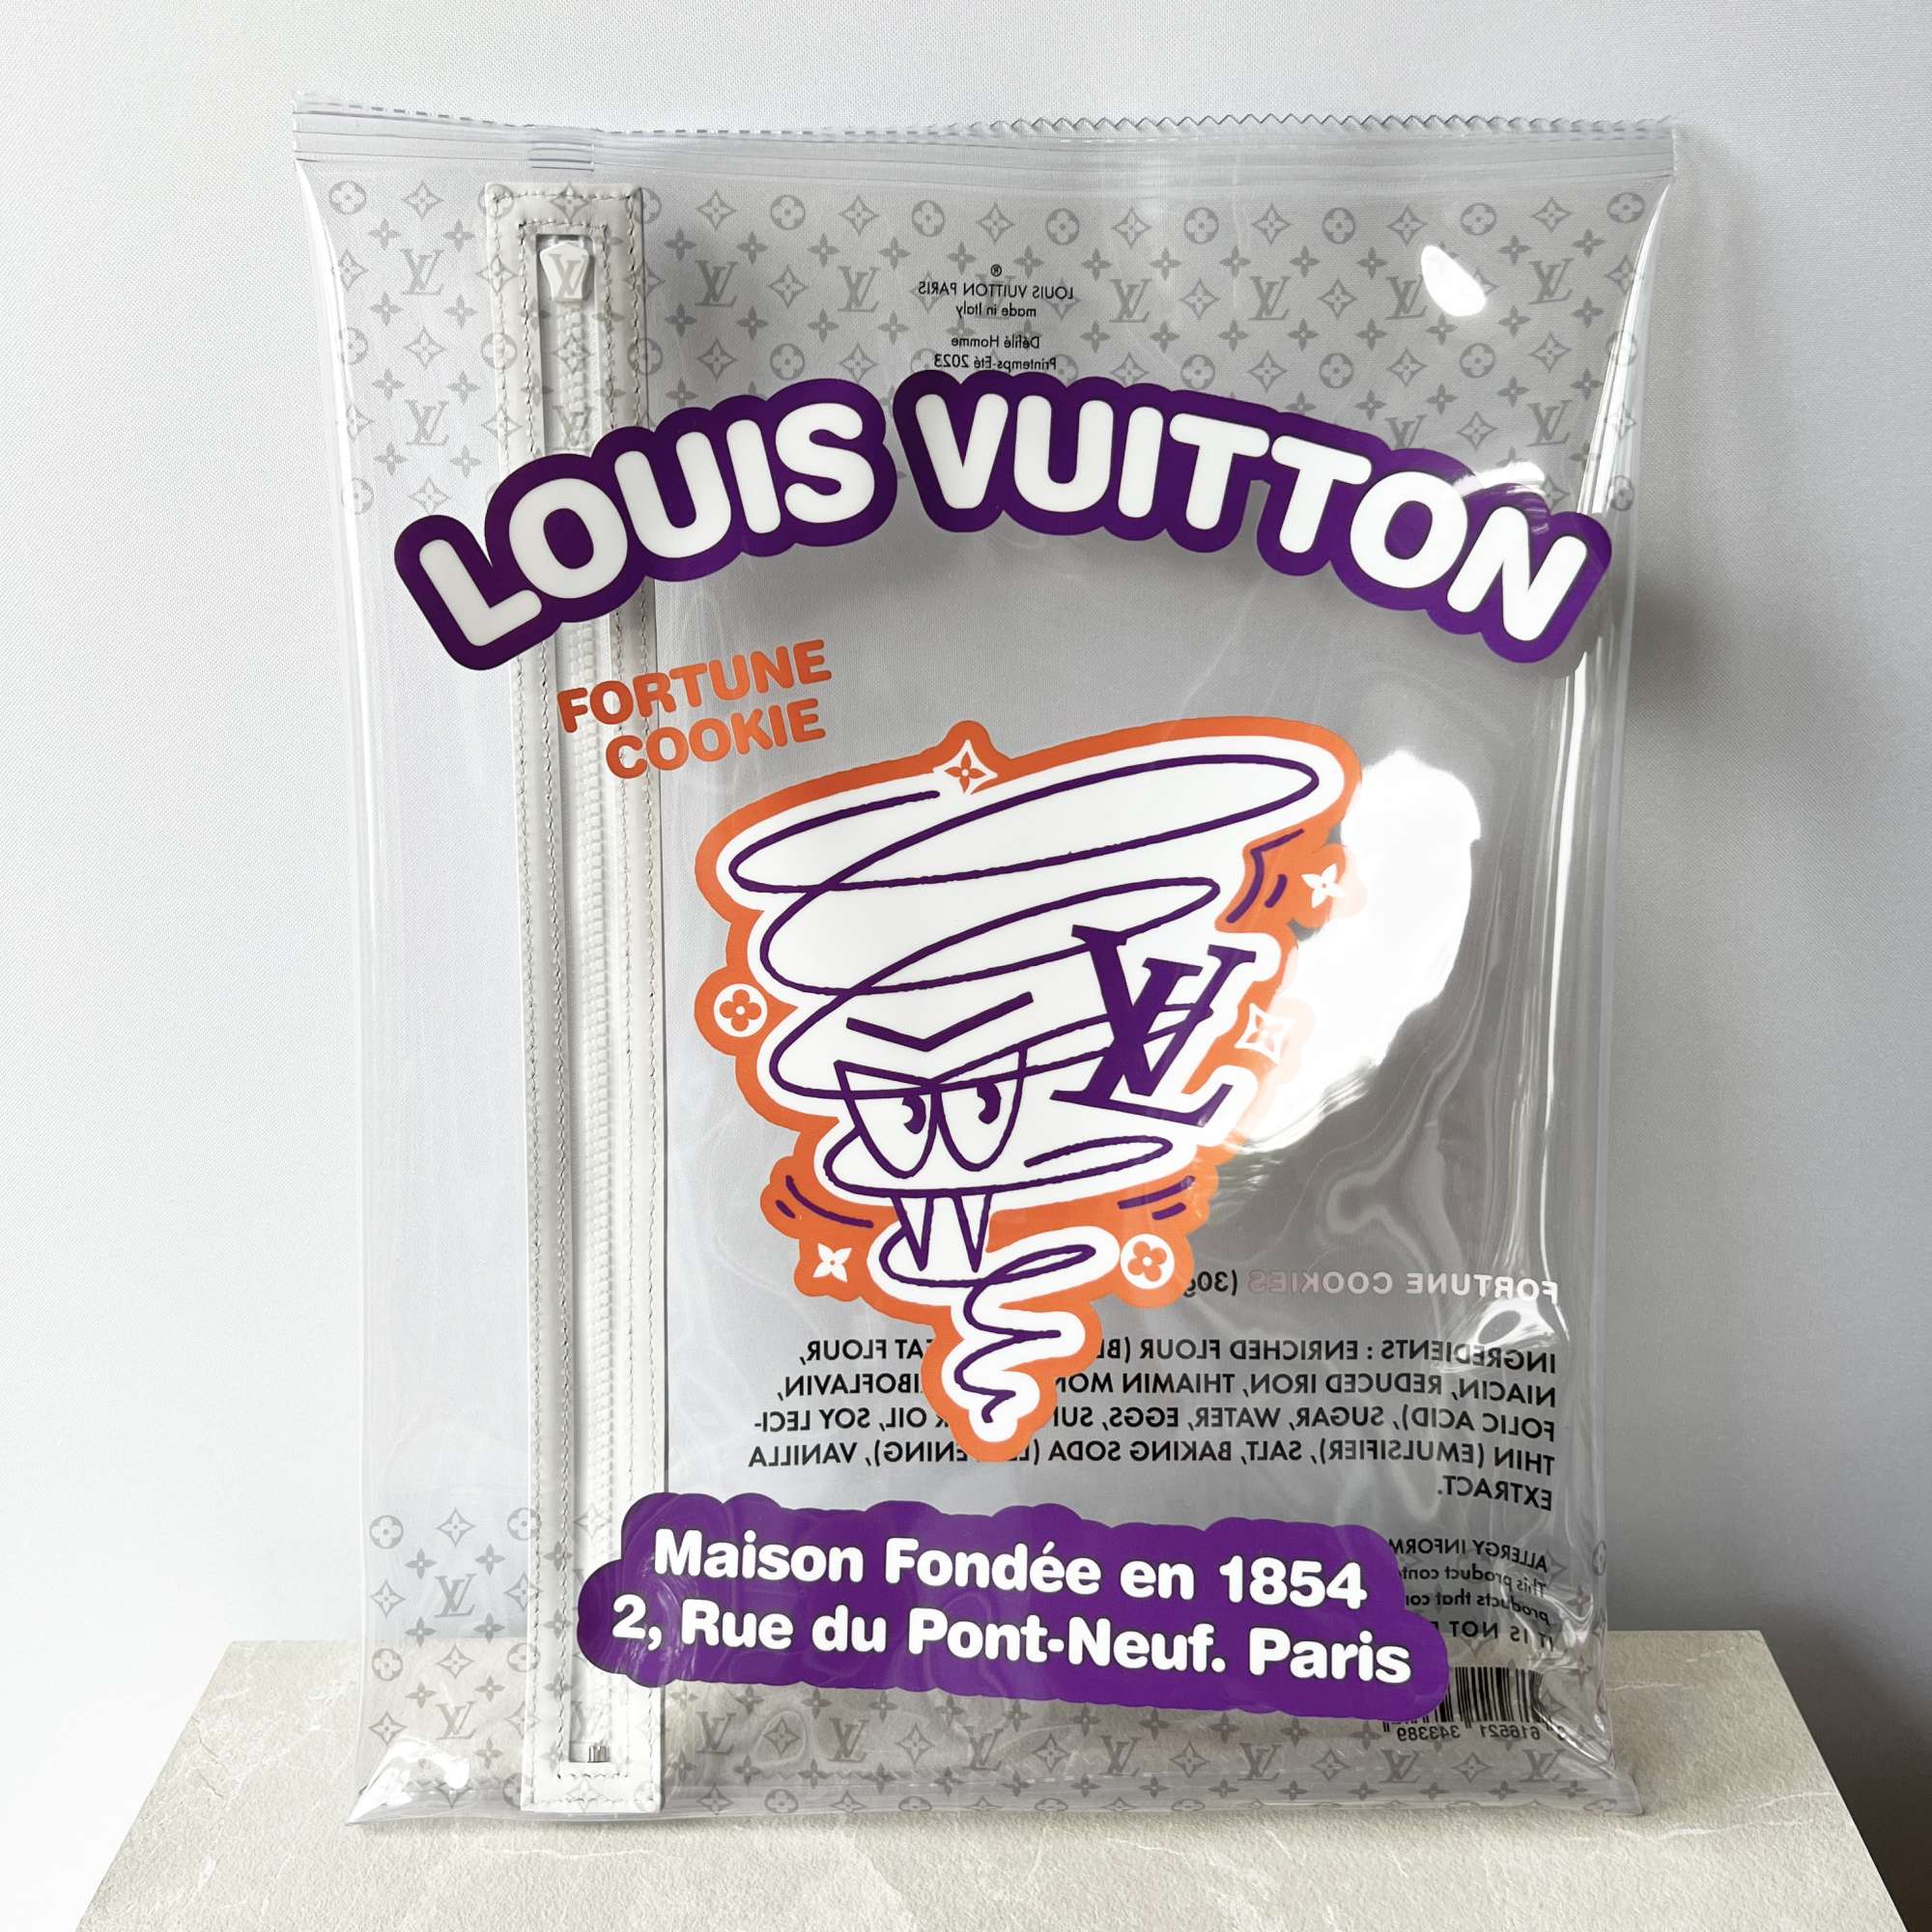 Louis Vuitton 2v1 Cookie kožená taška v komplet balení